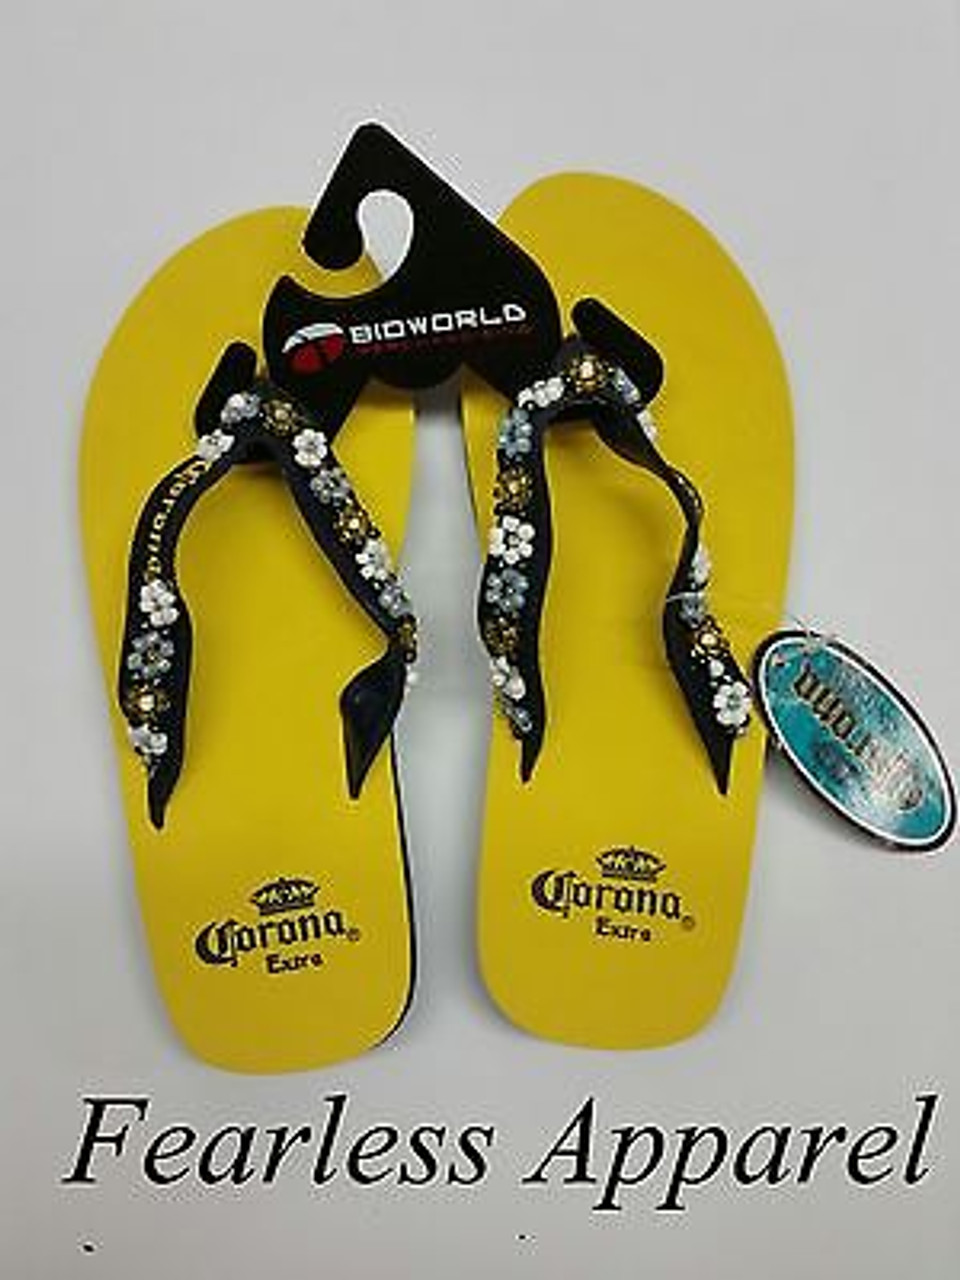 Bioworld Corona Extra Yellow Beer Mexico Sandals Flip Flops Women